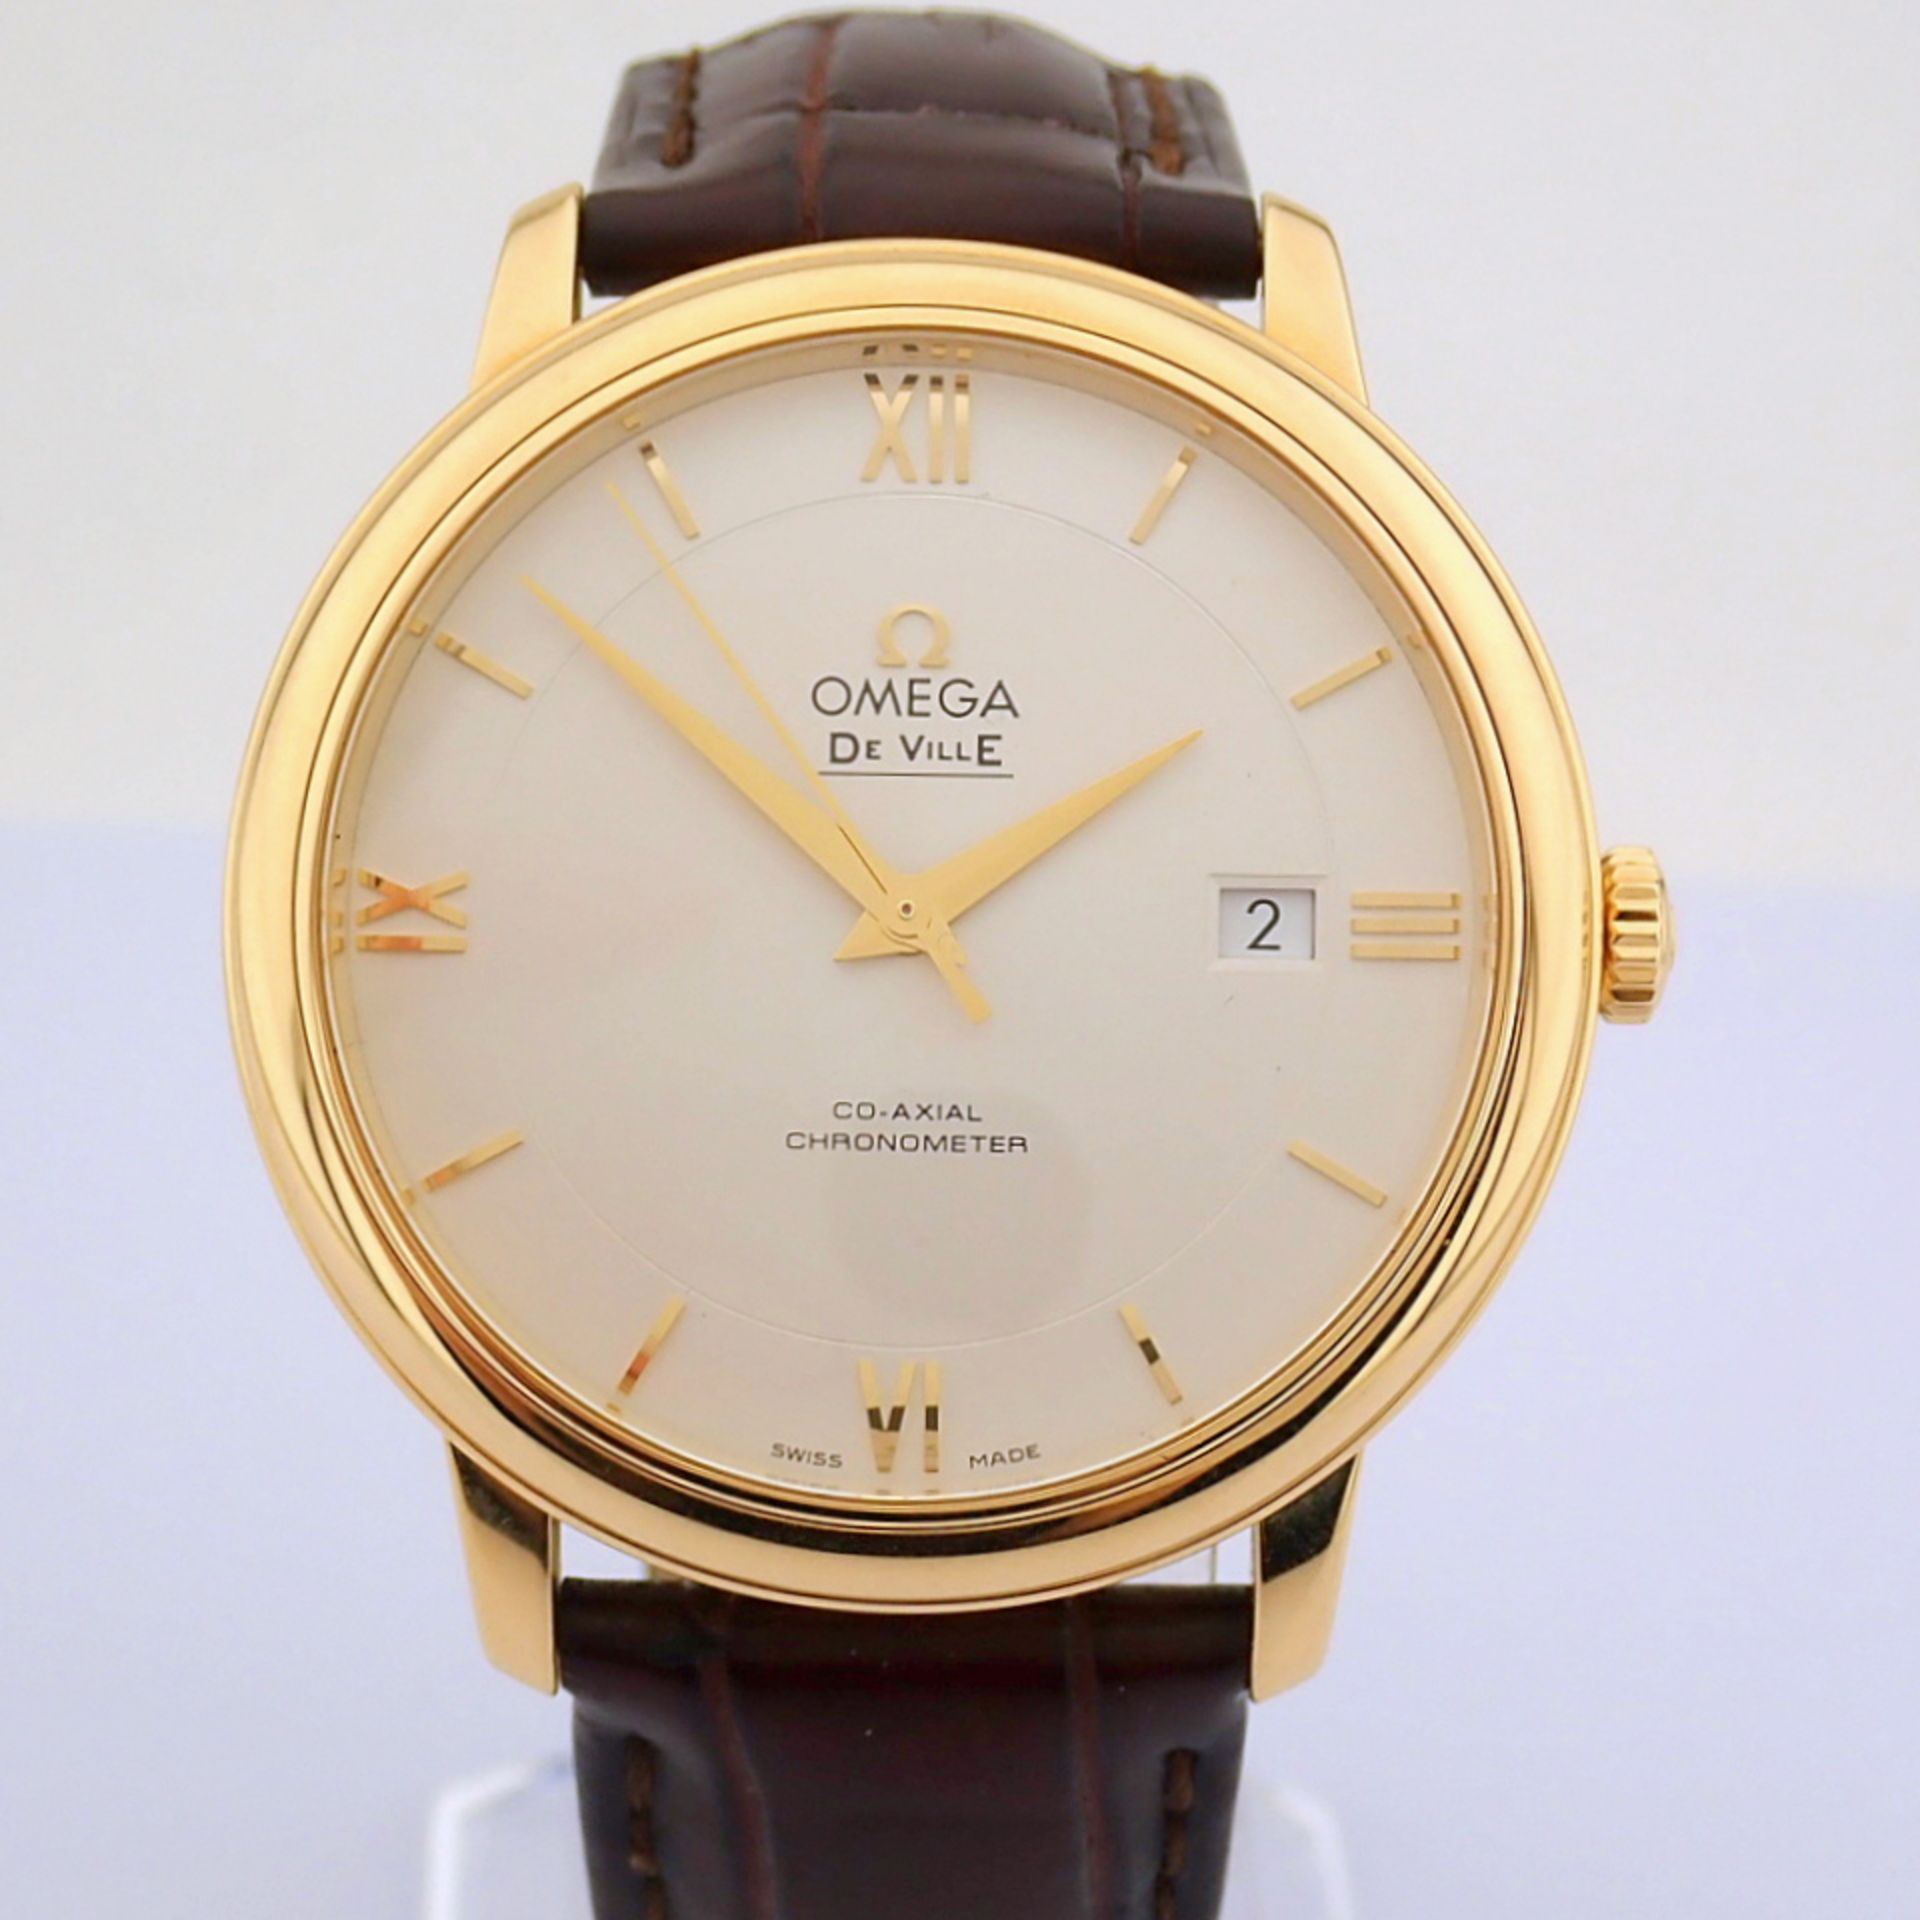 Omega / DE VILLE Prestige 18K Co-Axial Chronometer - Gentlmen's Yellow gold Wrist Watch - Image 12 of 13